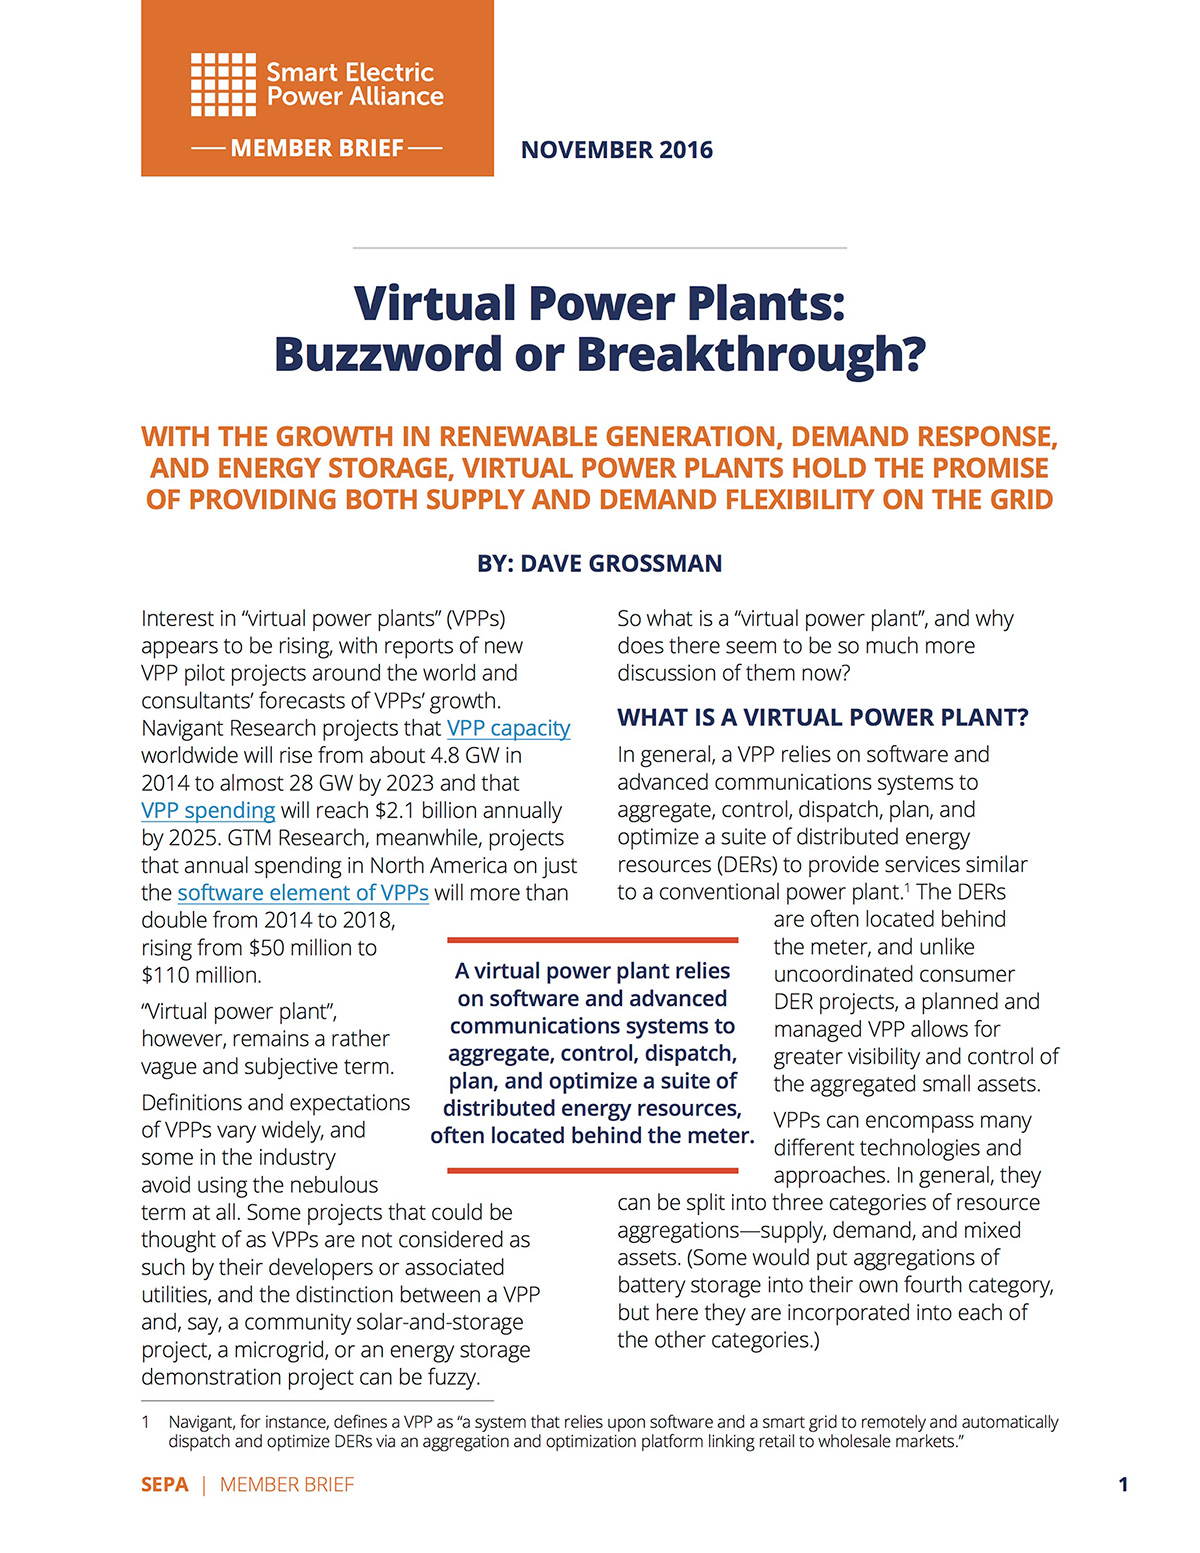 November Member Brief: Virtual Power Plants